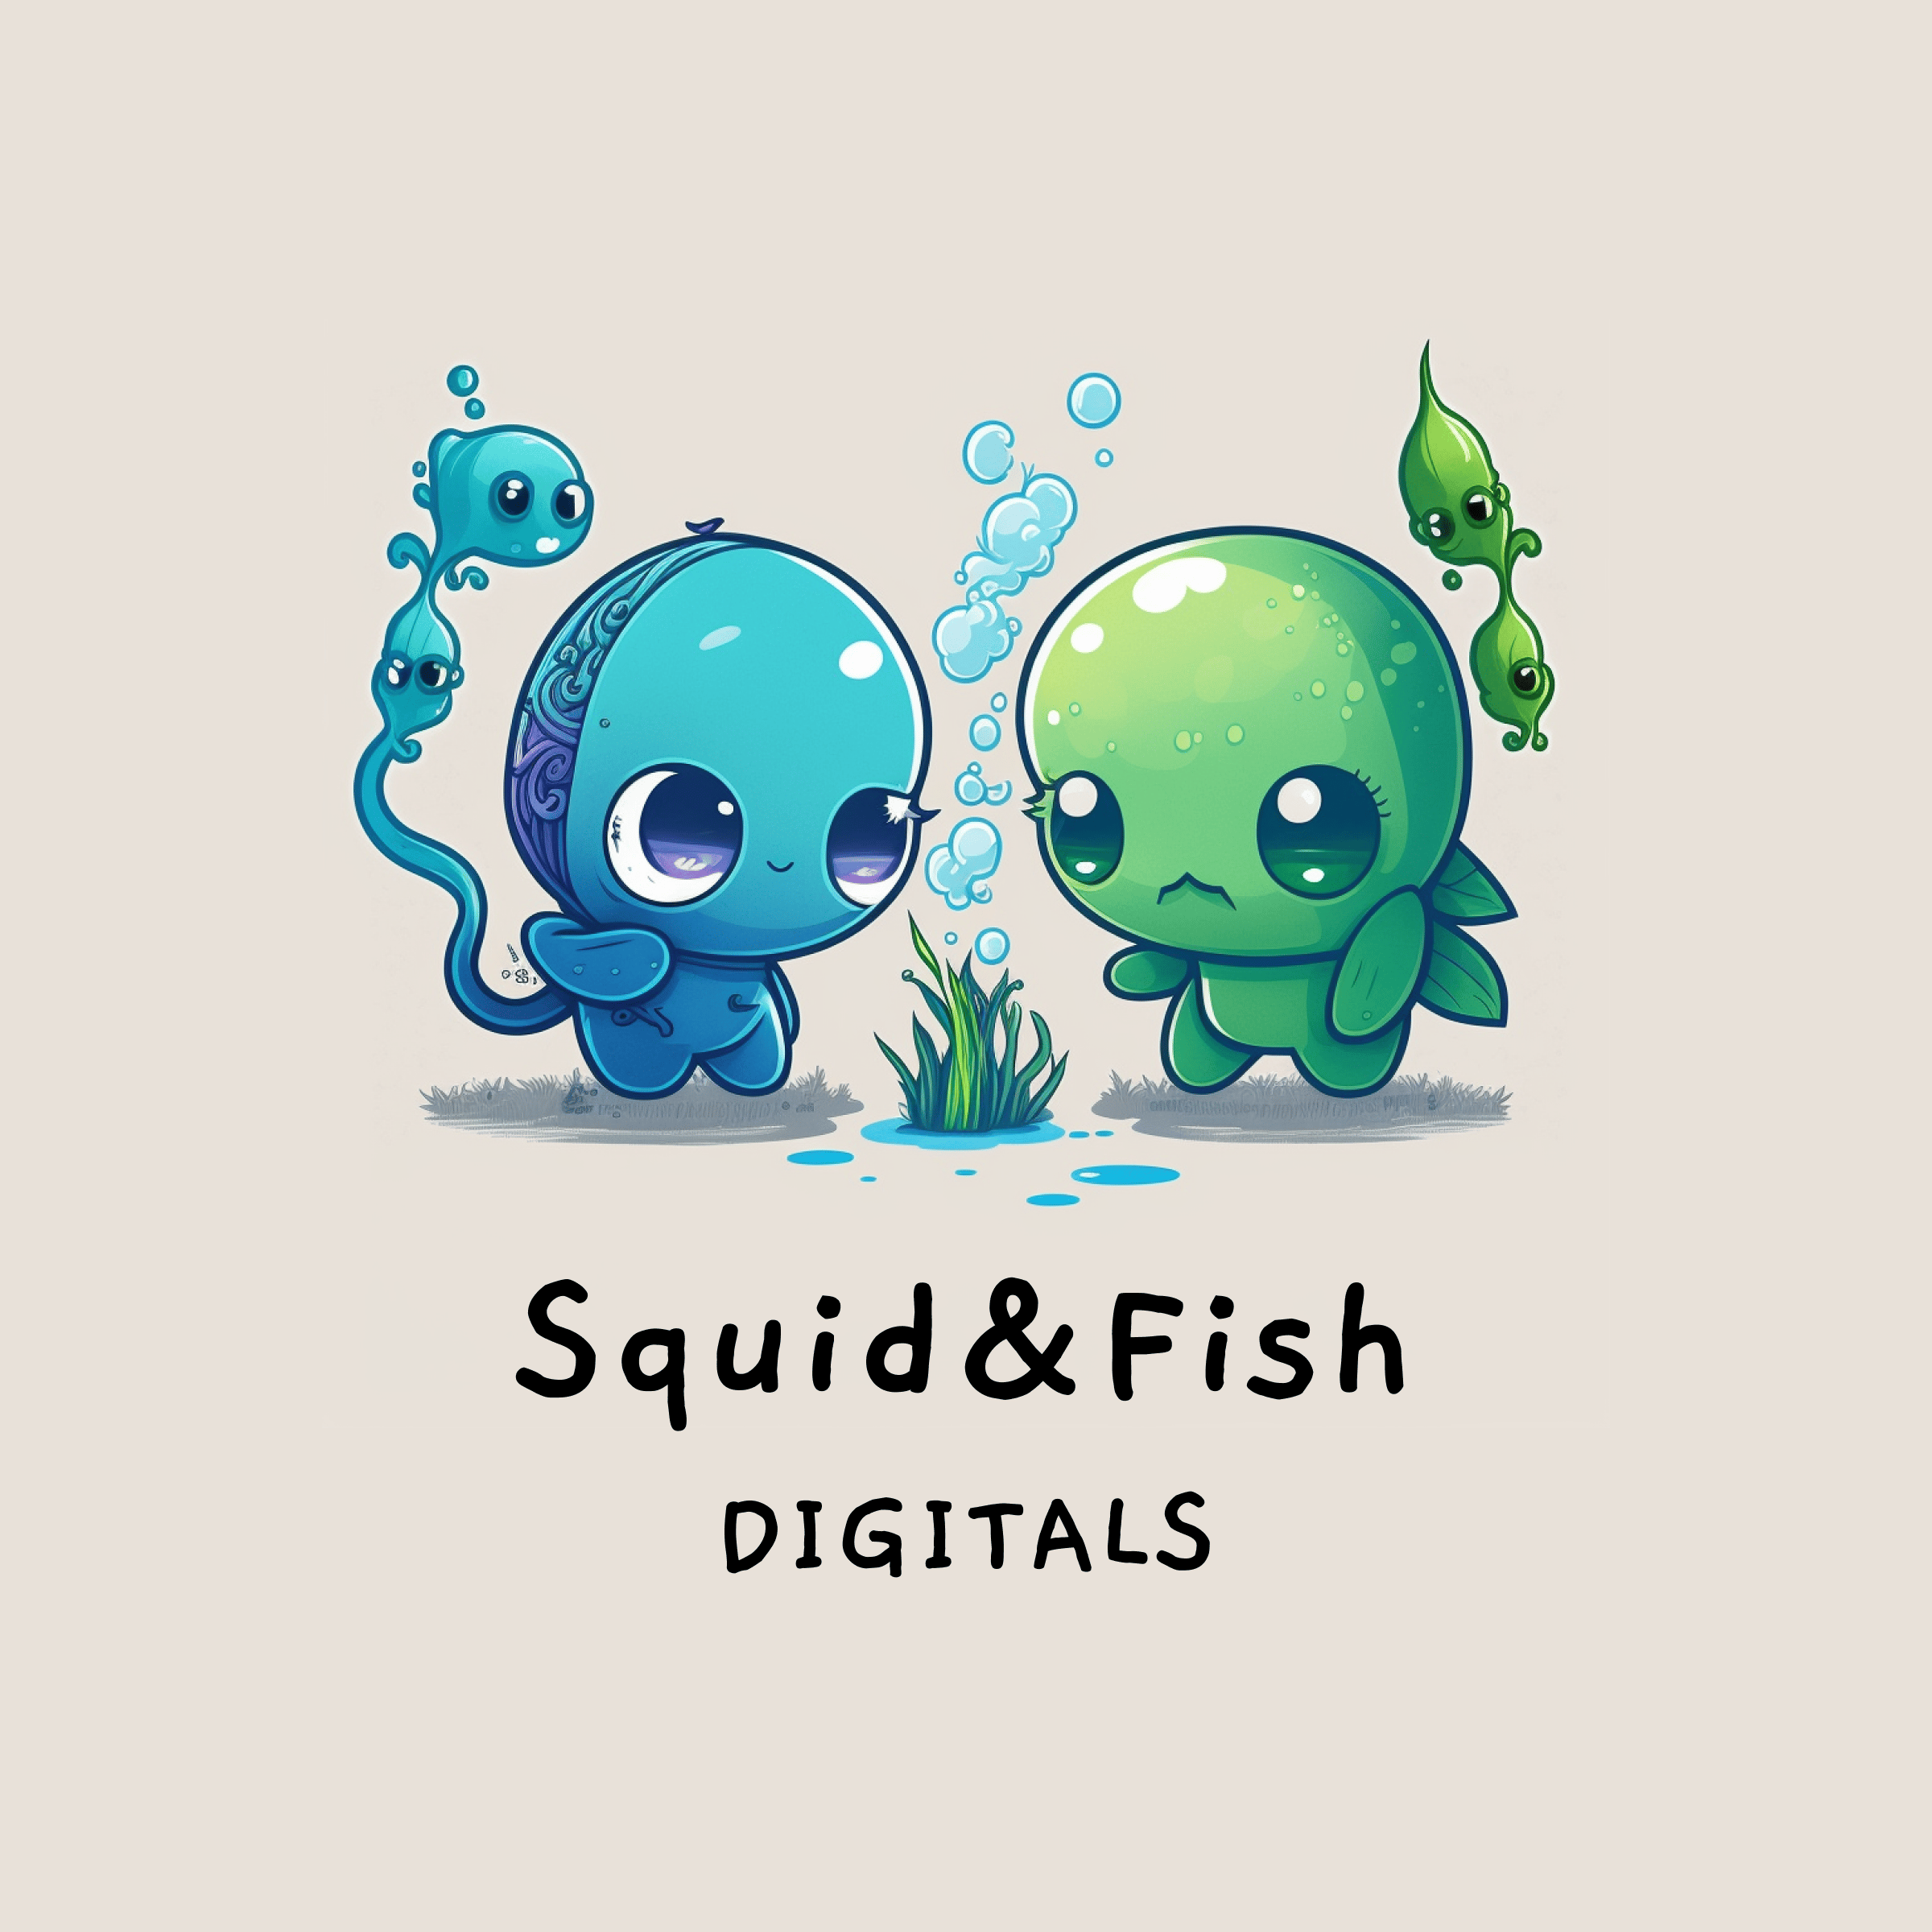 Squid & Fish님의 프로필 사진